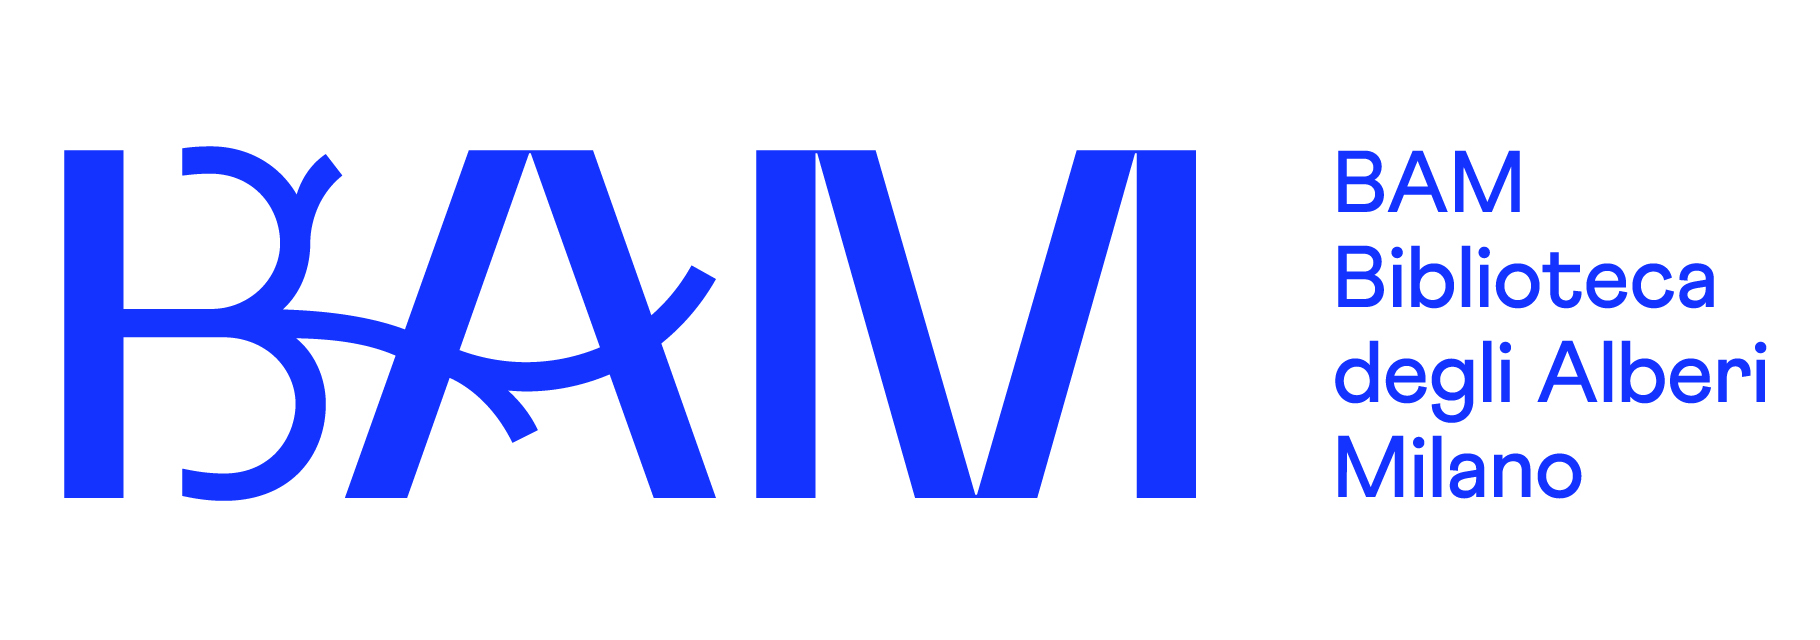 BAM Biblioteca degli Alberi Milano logo